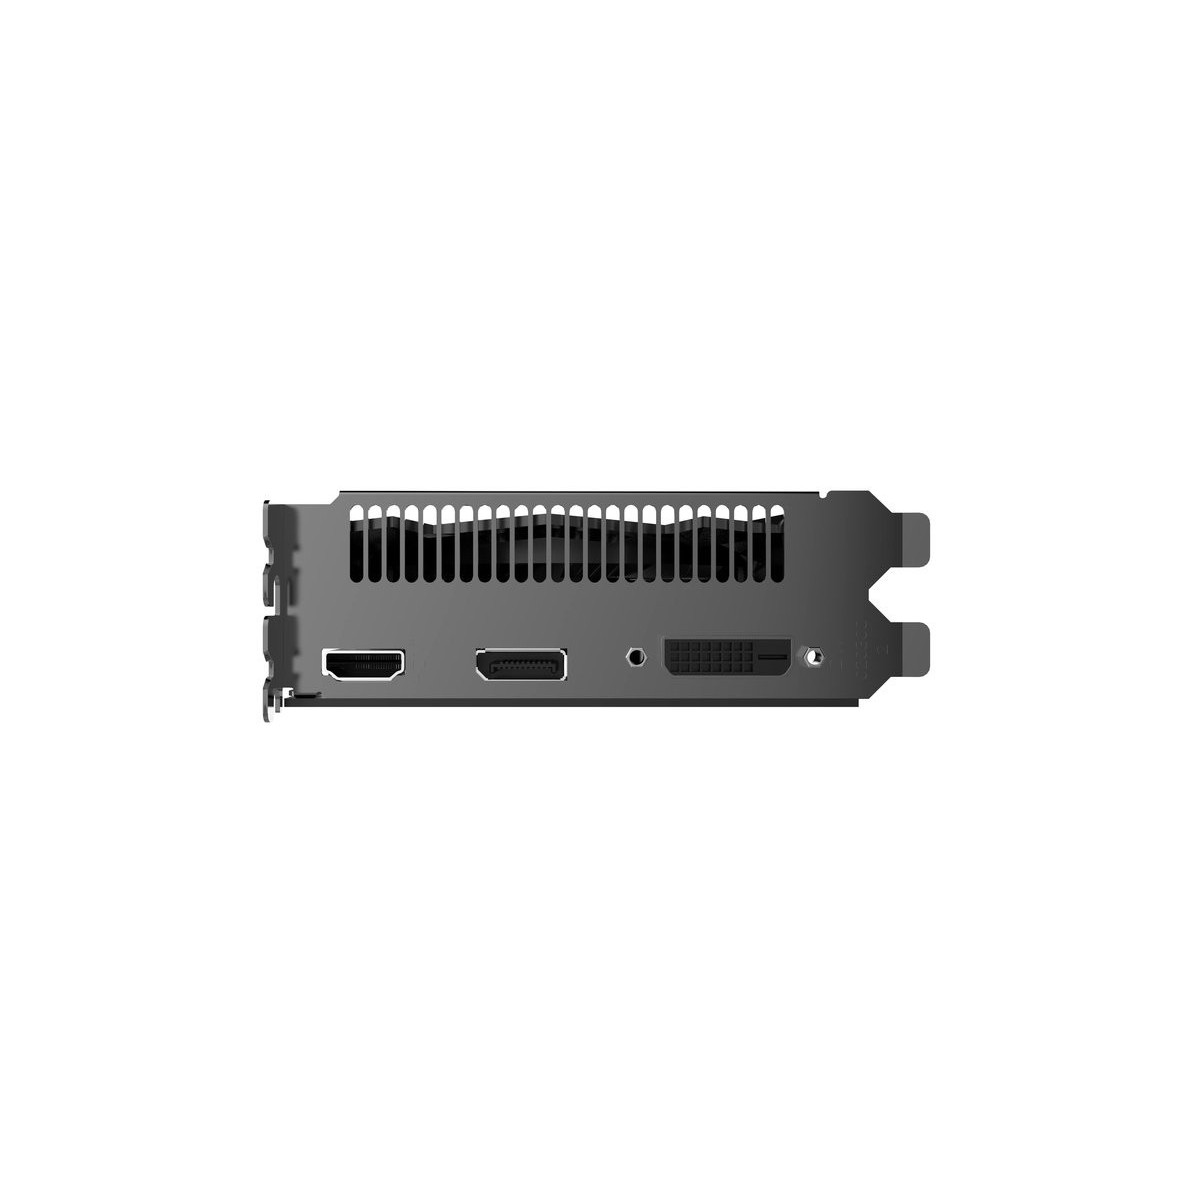 ZOTAC GAMING GeForce GTX 1650 OC GDDR6 - GeForce GTX 1650 - 4 GB - GDDR6 - 128 bit - 3840 x 2160 pixels - PCI Express 3.0